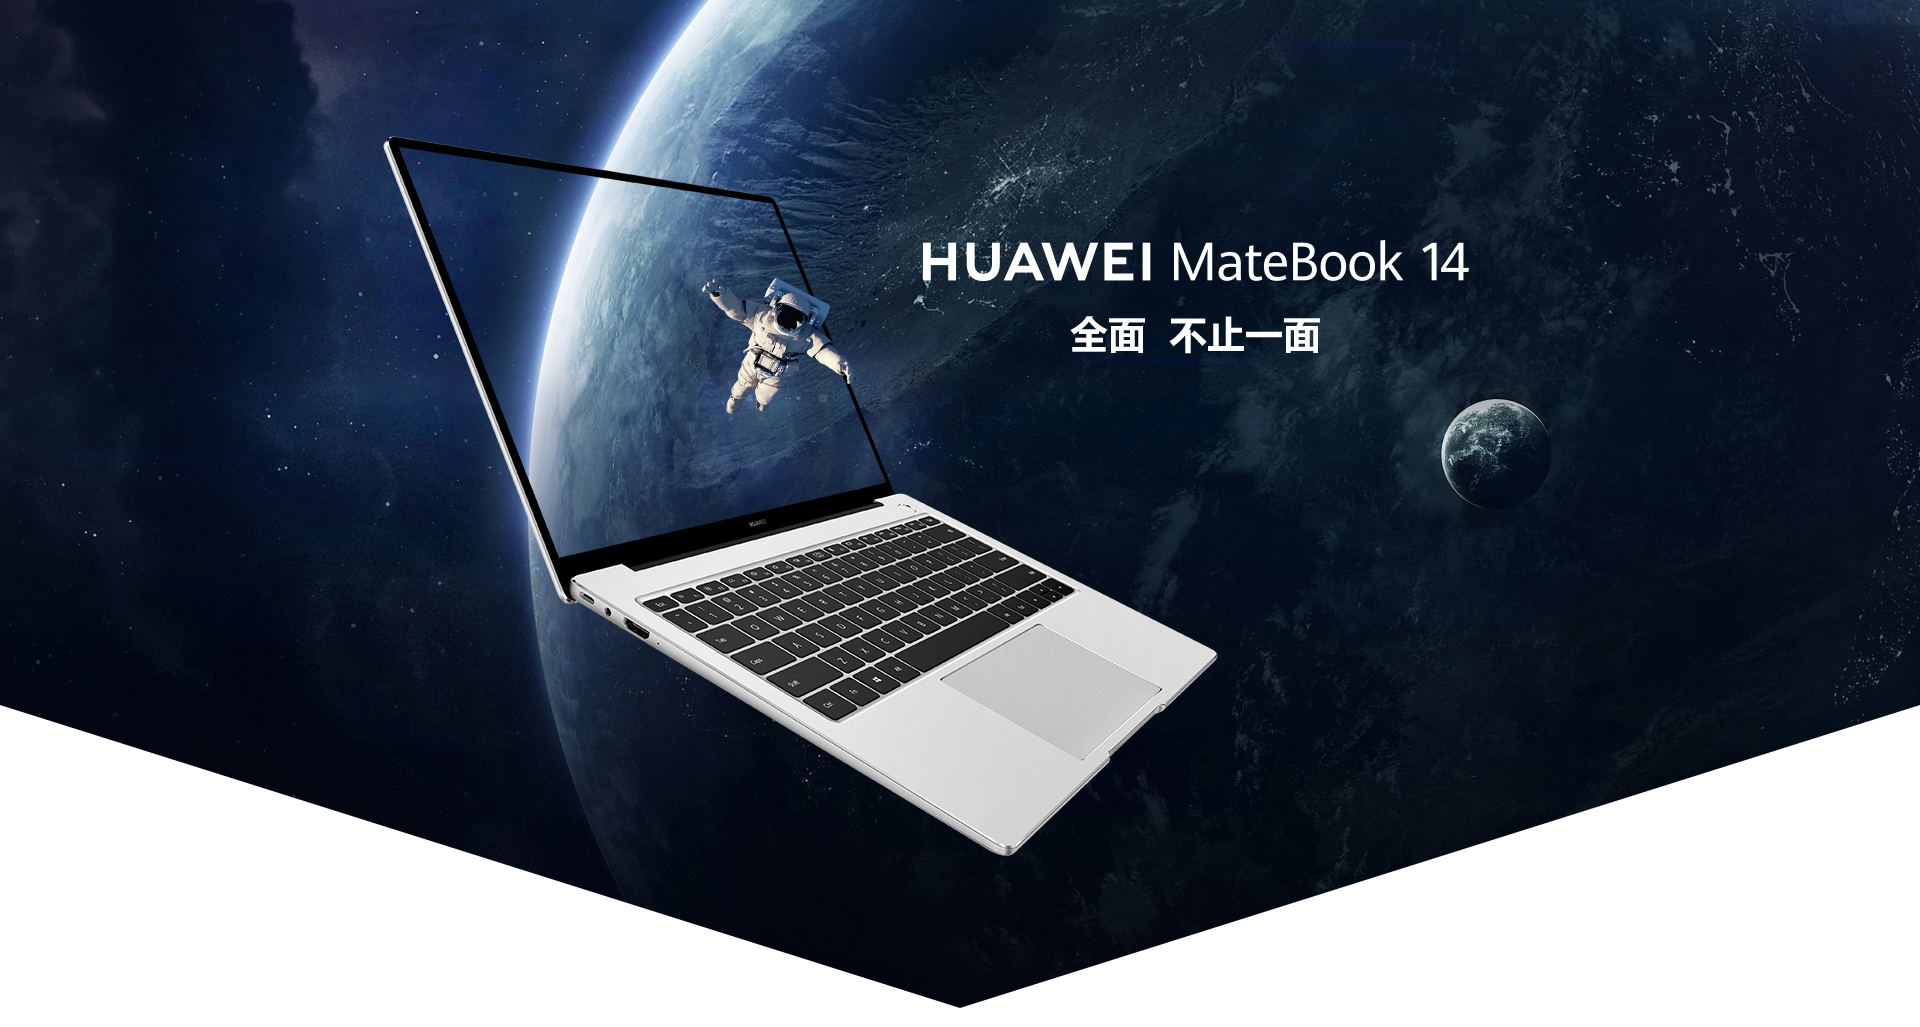 Huawei MateBook 14 featured